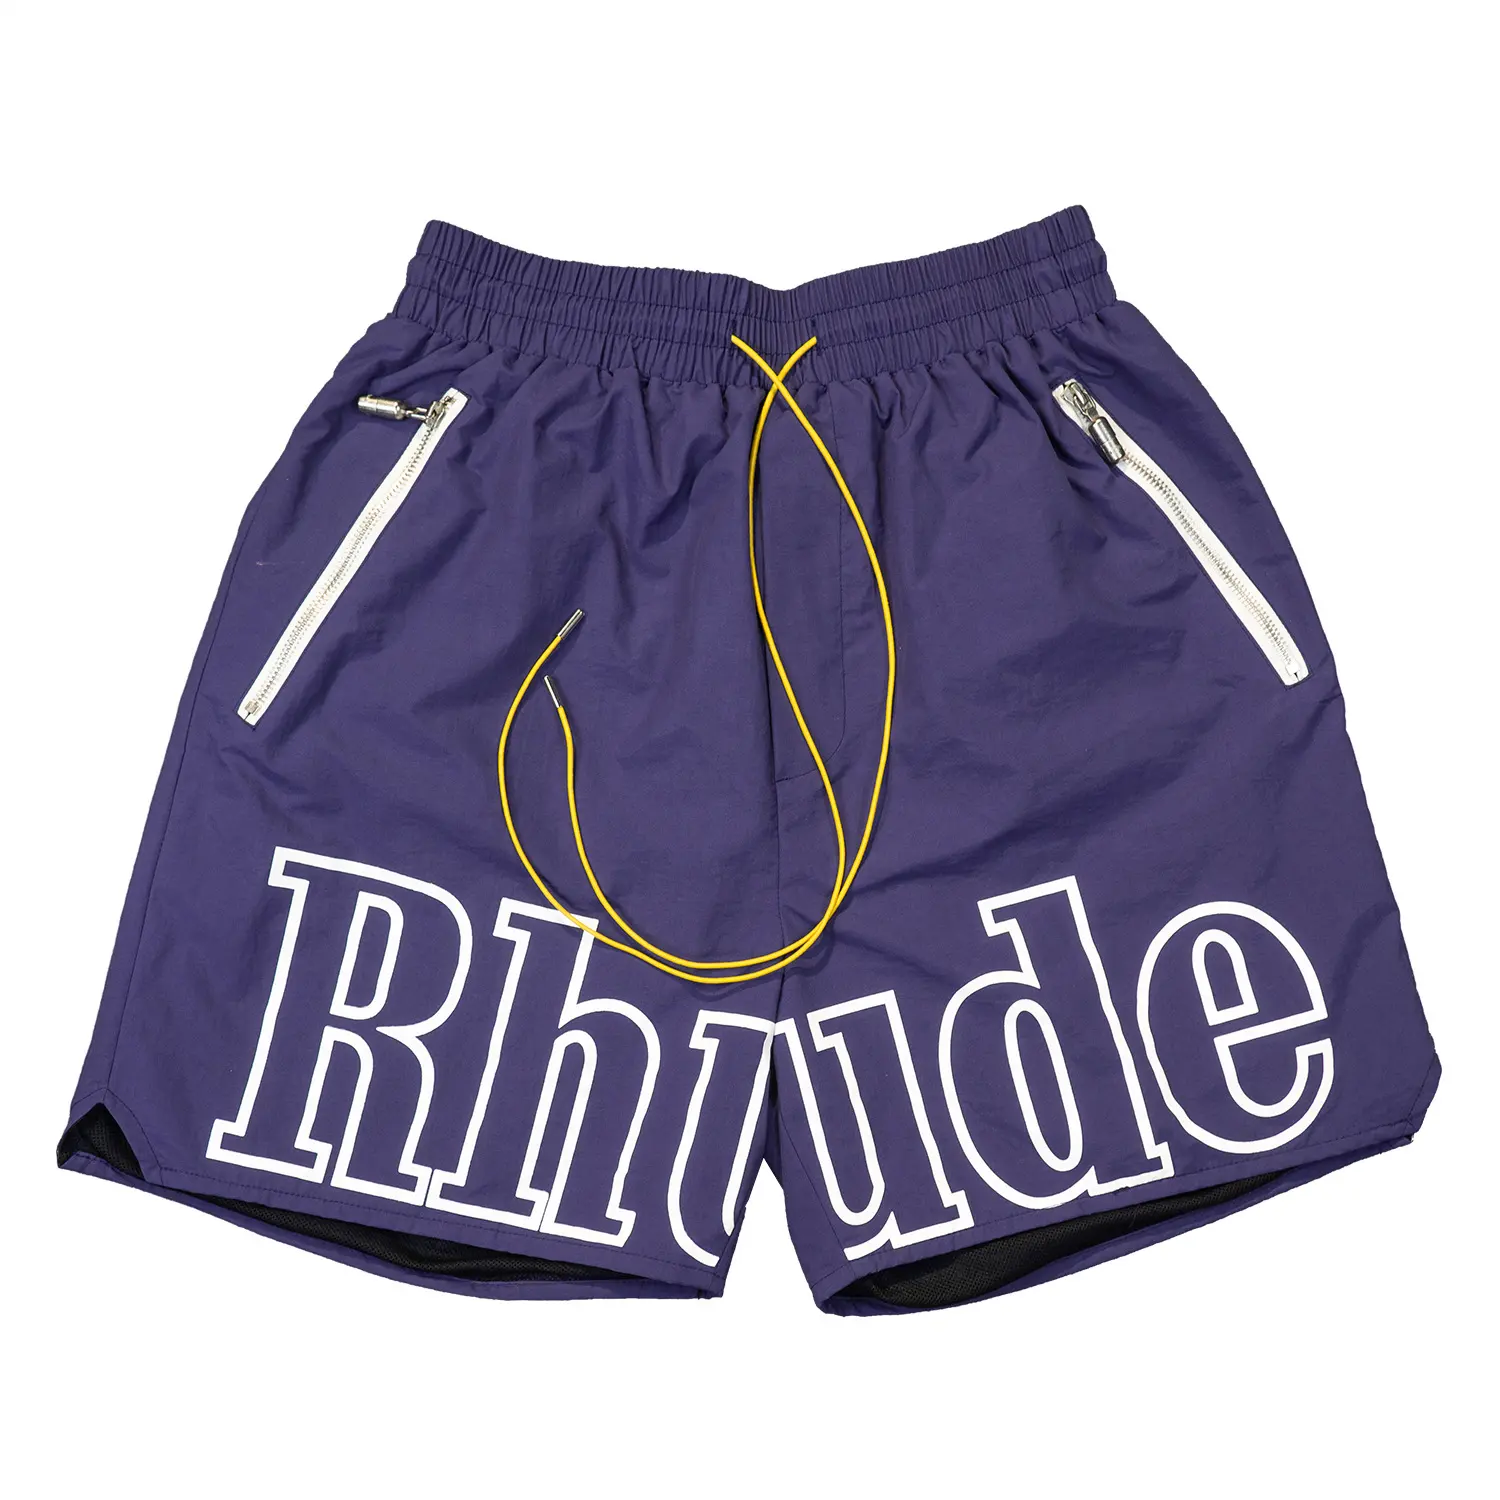 Custom men's shorts 100% nylon athletics gym shorts mens printed sport shorts for men